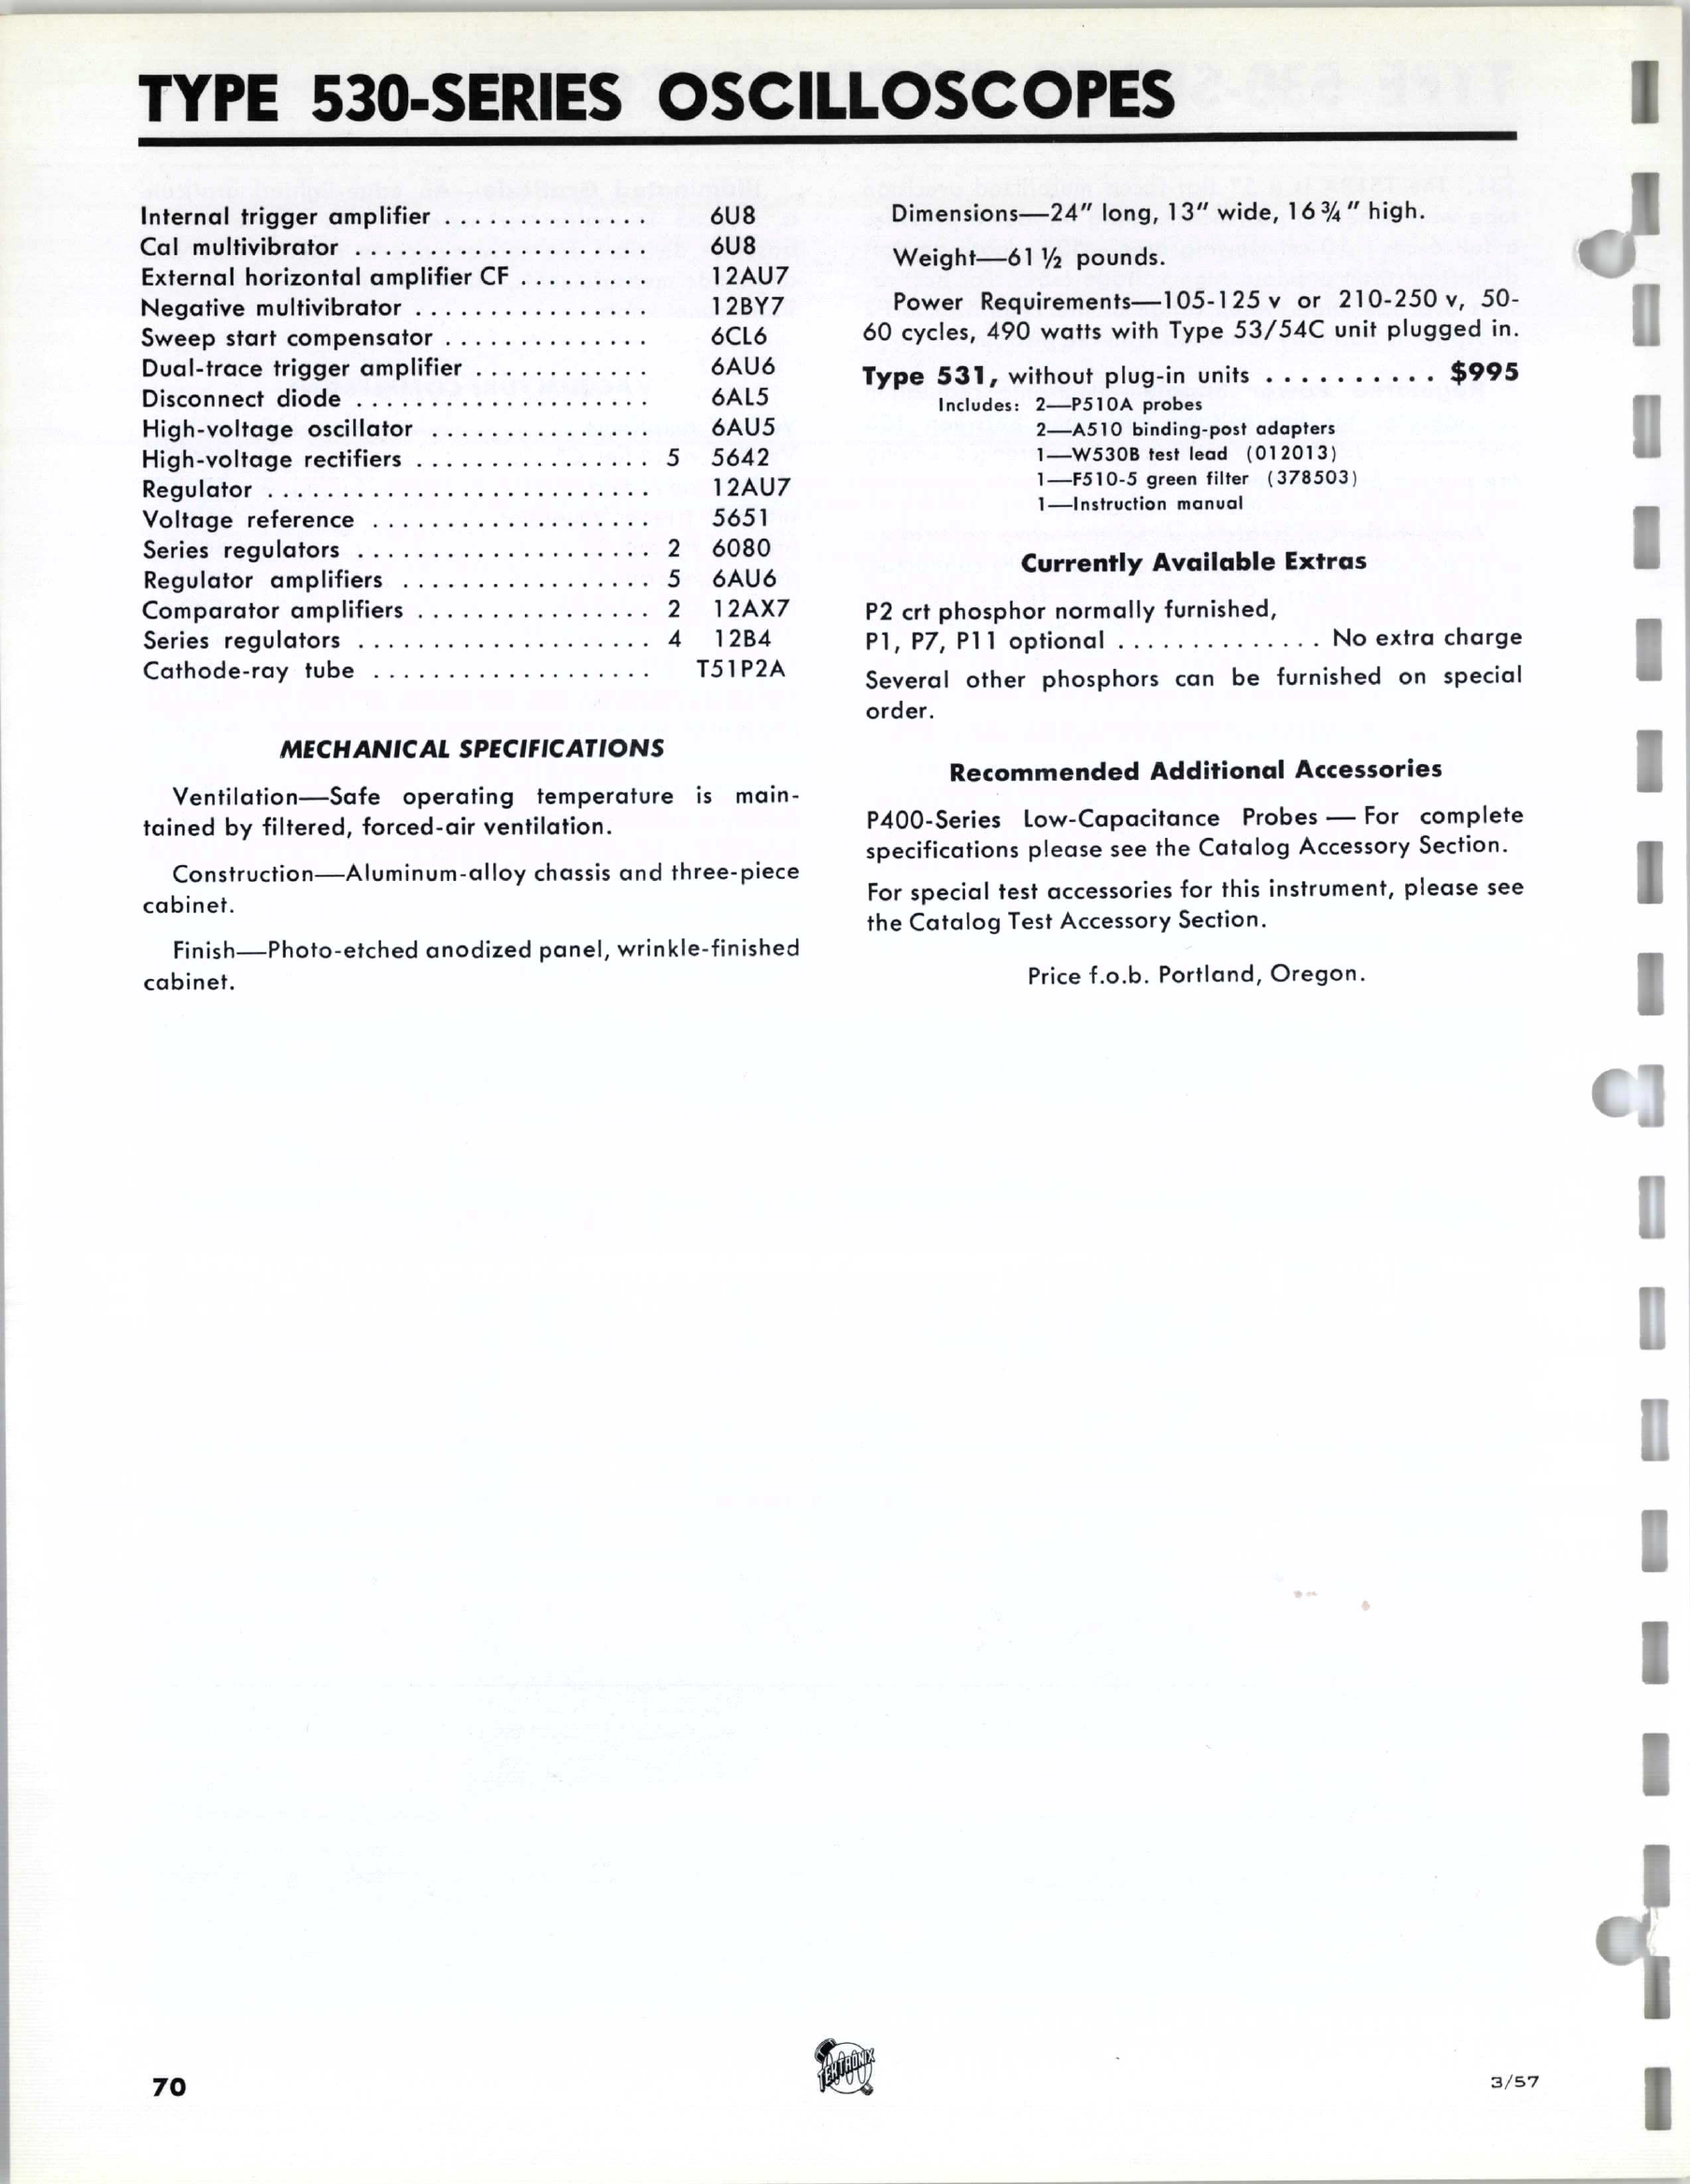 Original Tektronix Instruction Manual for the 53/54B Plugin 